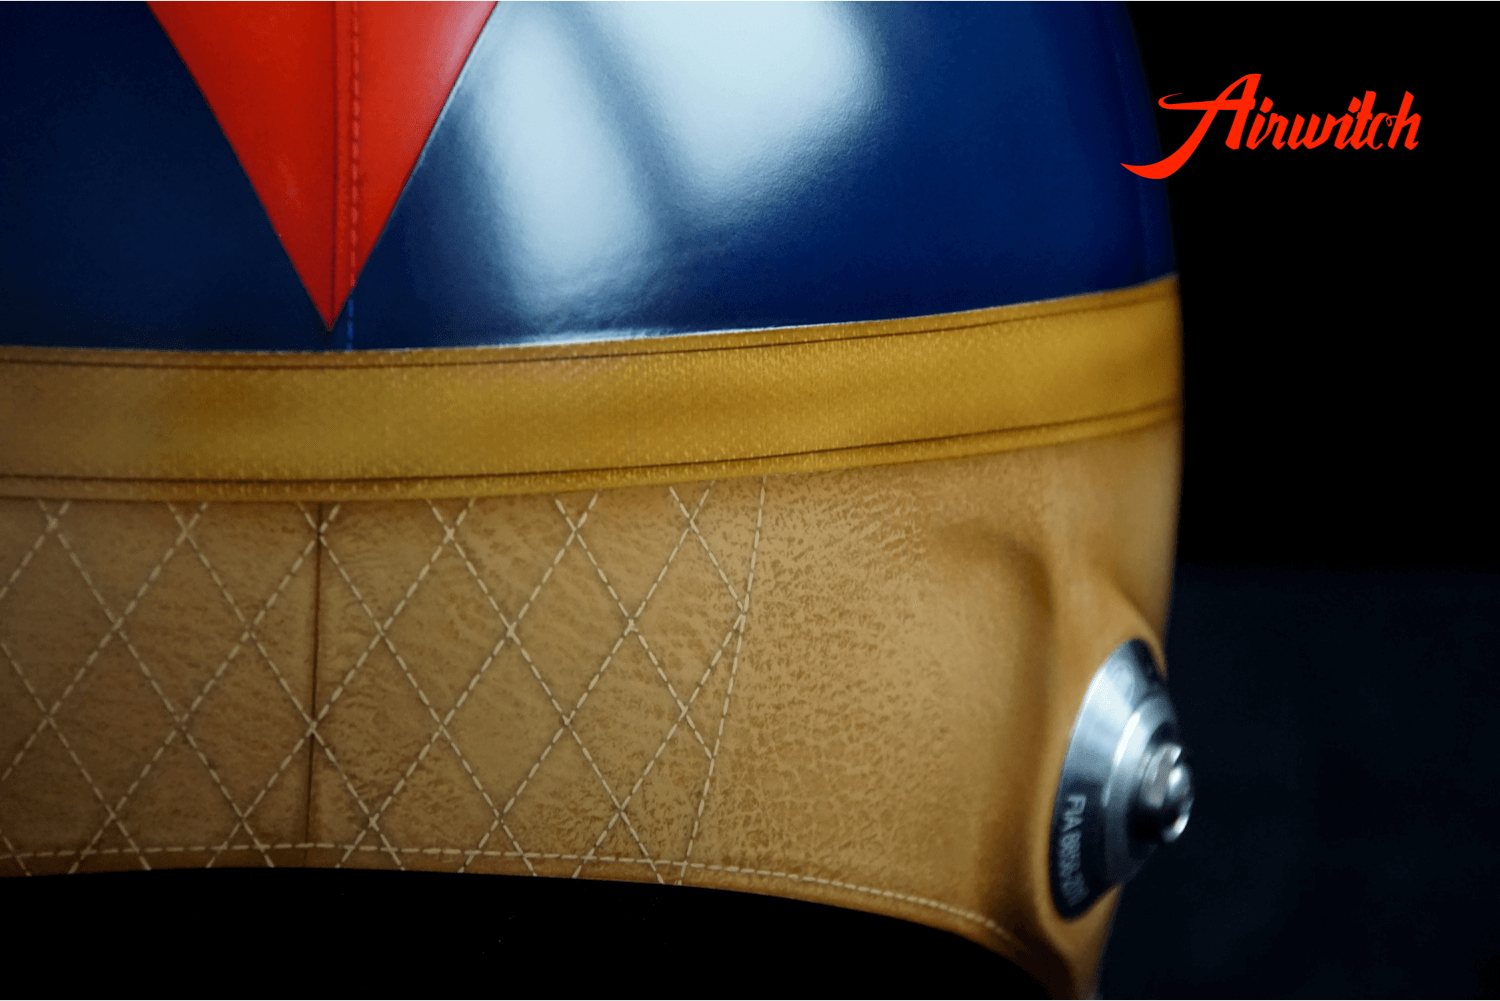 Custom paint old leather racing rallye helmet Mille Miglia Airbrush Lackierung in blau, rot und braun "1000 Miglia" Airwitch